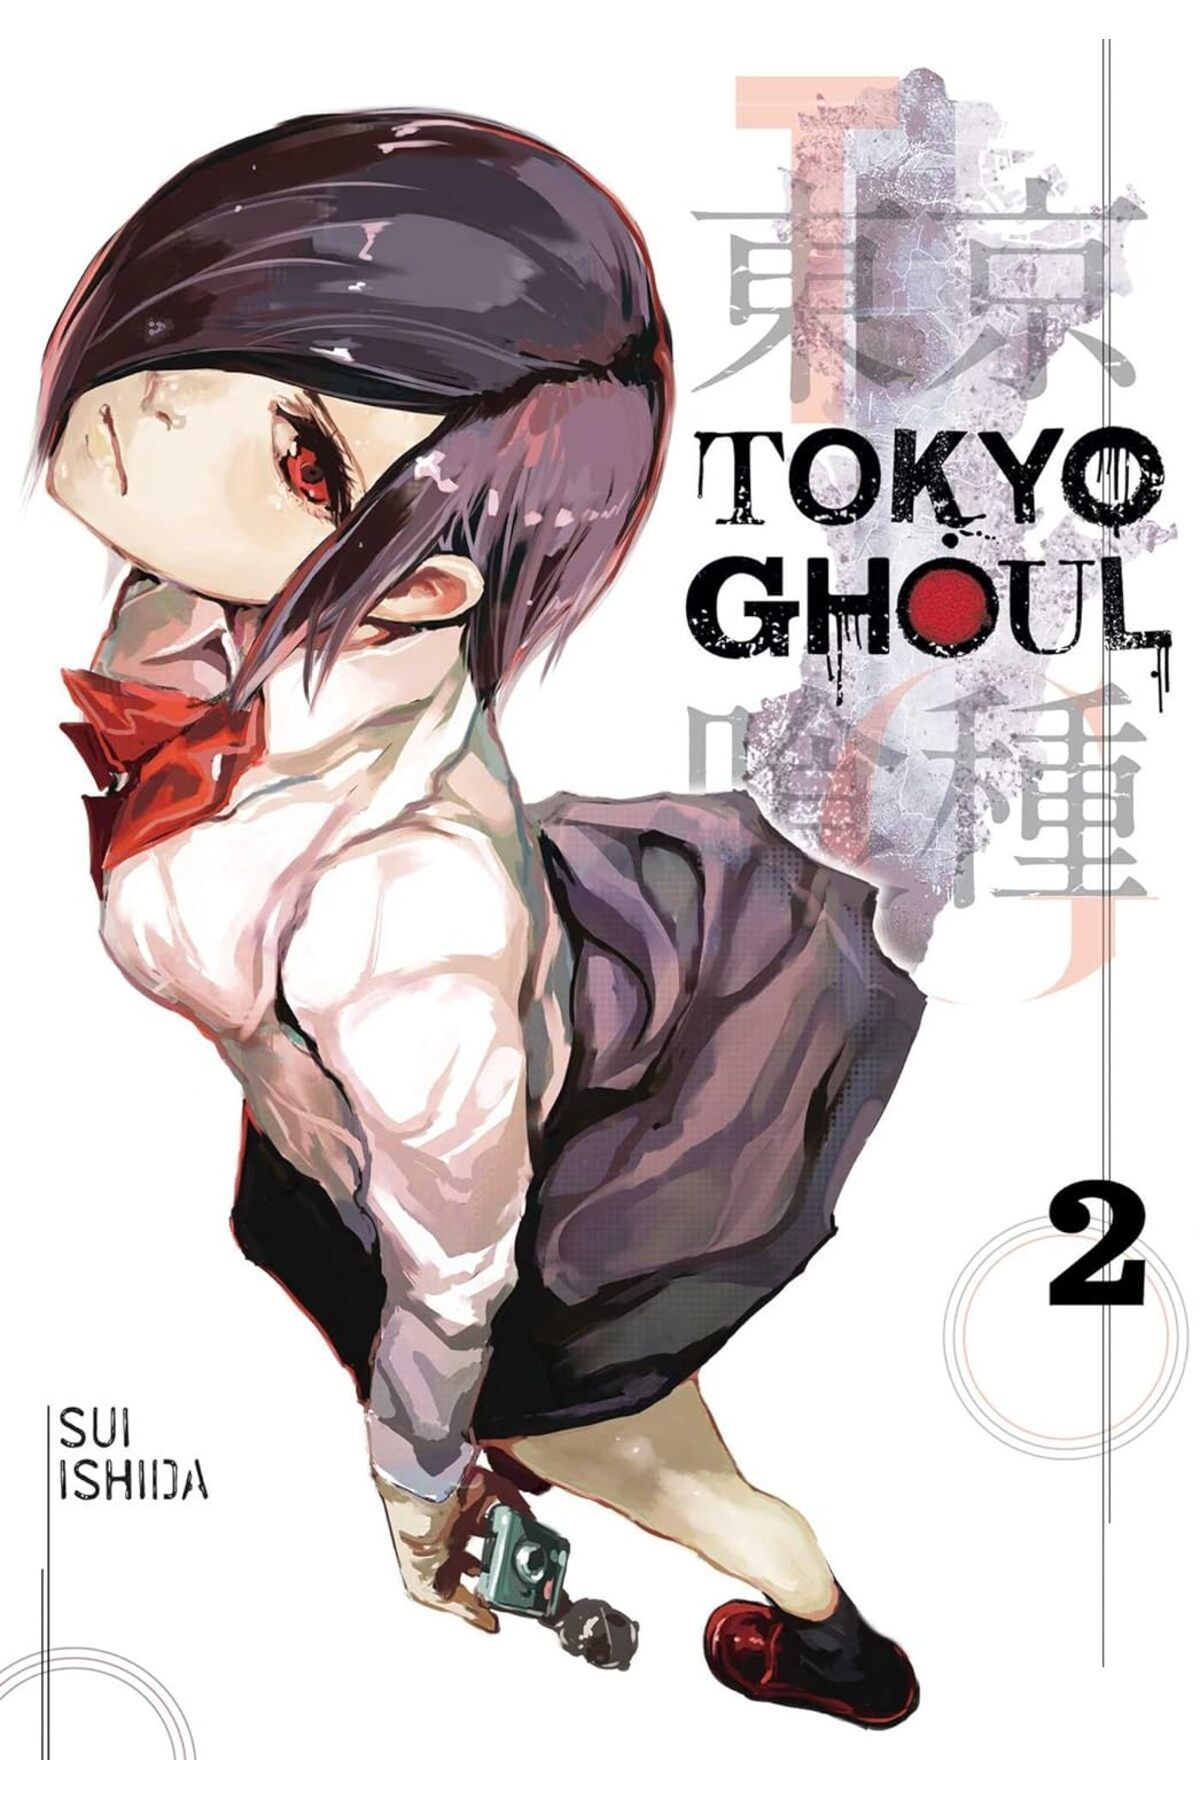 Kodansha International Tokyo Ghoul: re, Vol. 2 / Volume 2 - Sui Ishida